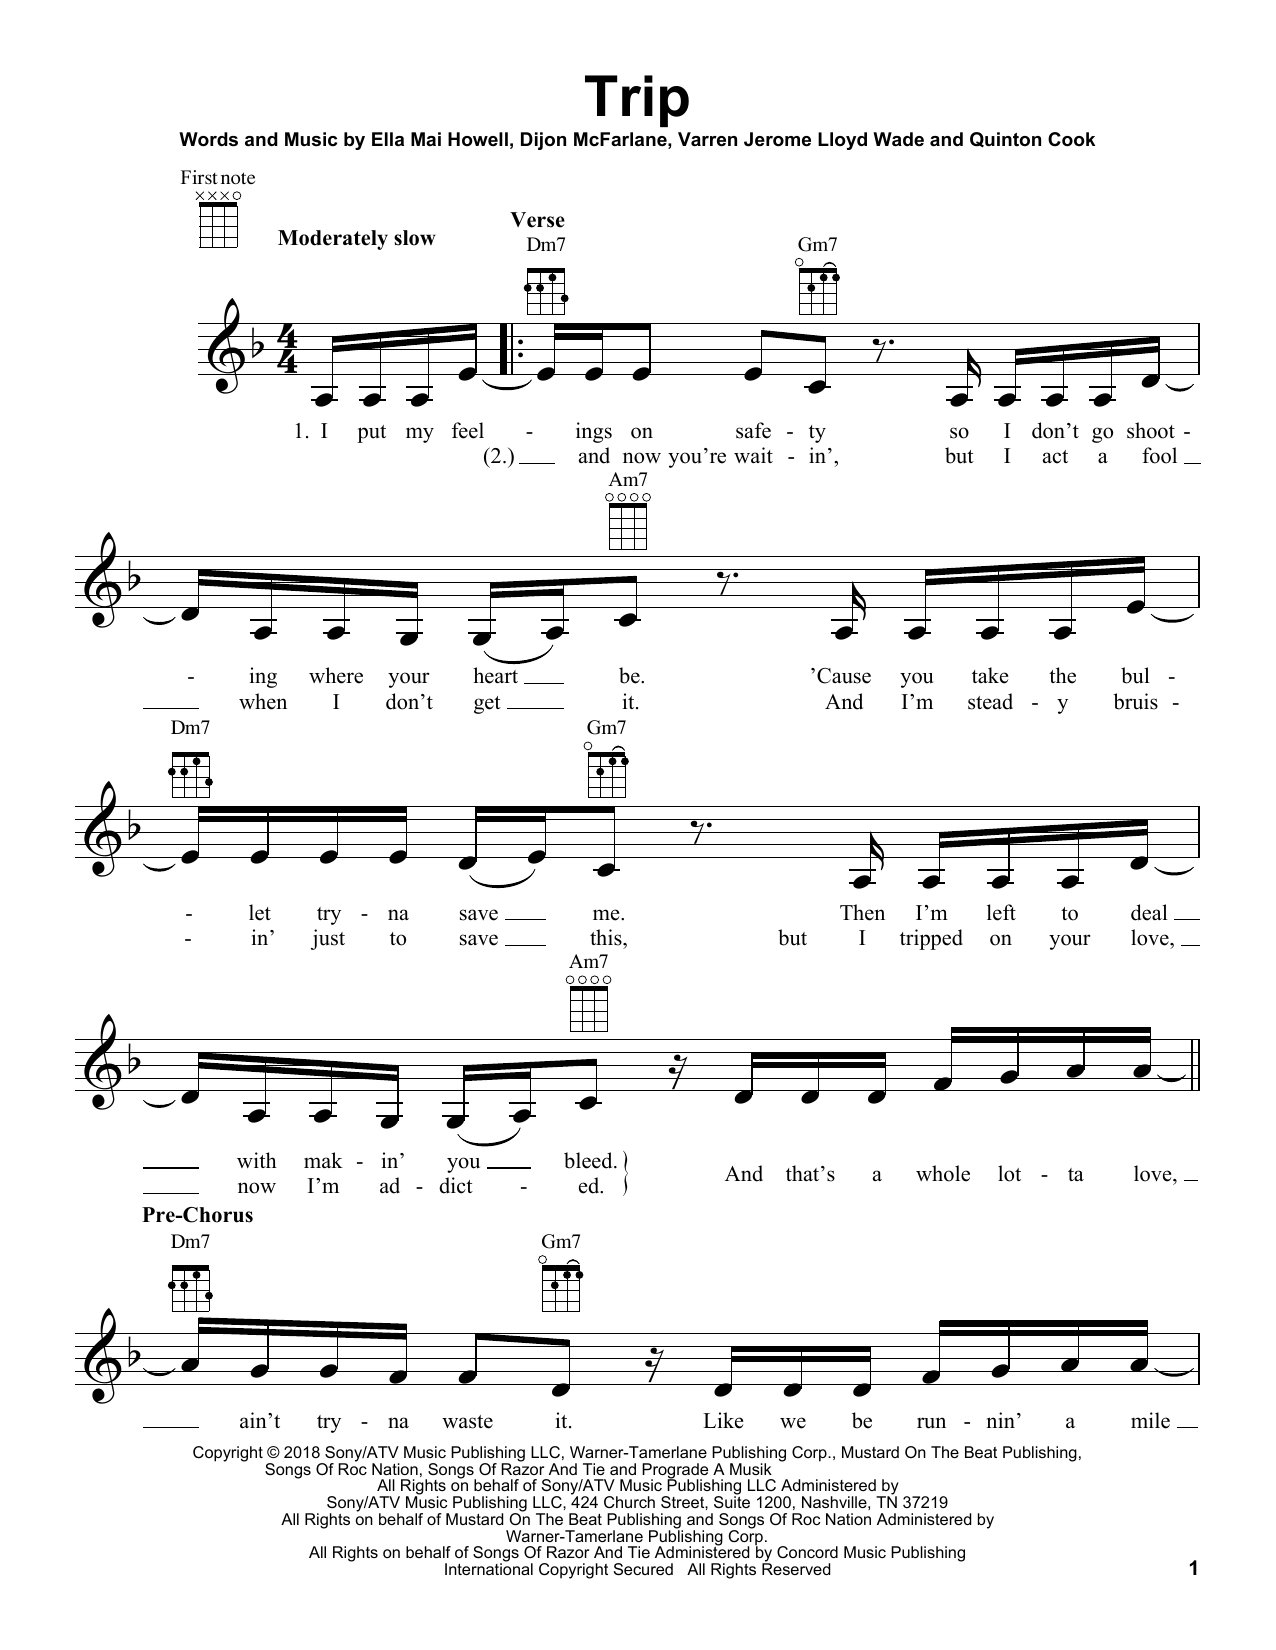 Ella Mai "Trip" Sheet Music Notes Download Printable PDF Score 411544